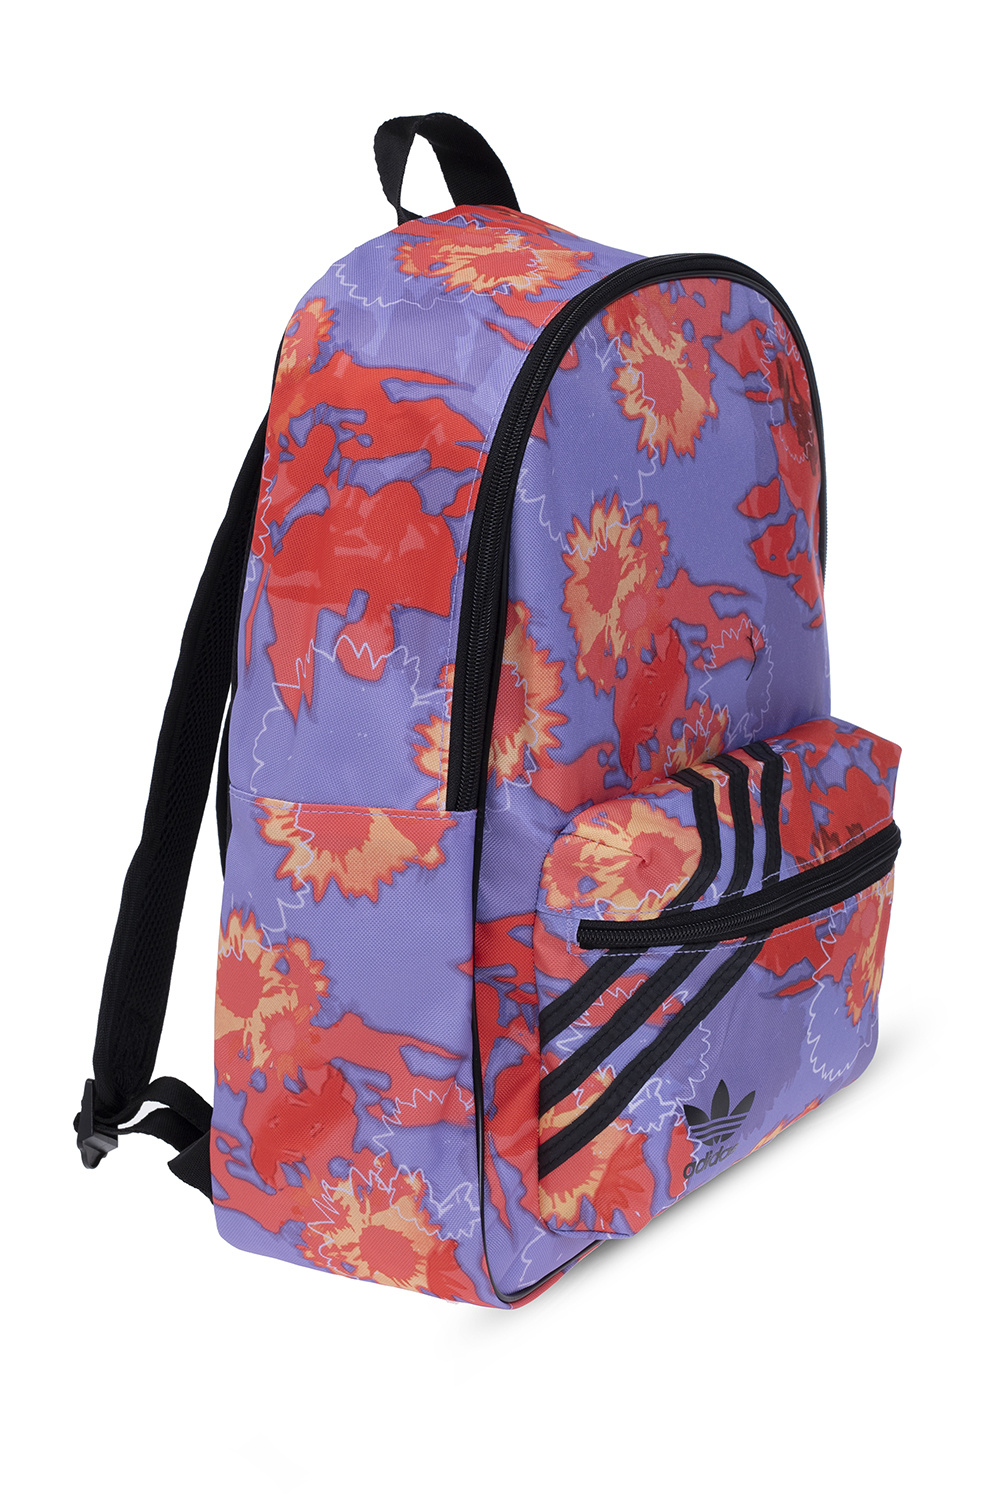 Louis Vuitton trio messenger bag - clothing & accessories - by owner -  apparel sale - craigslist